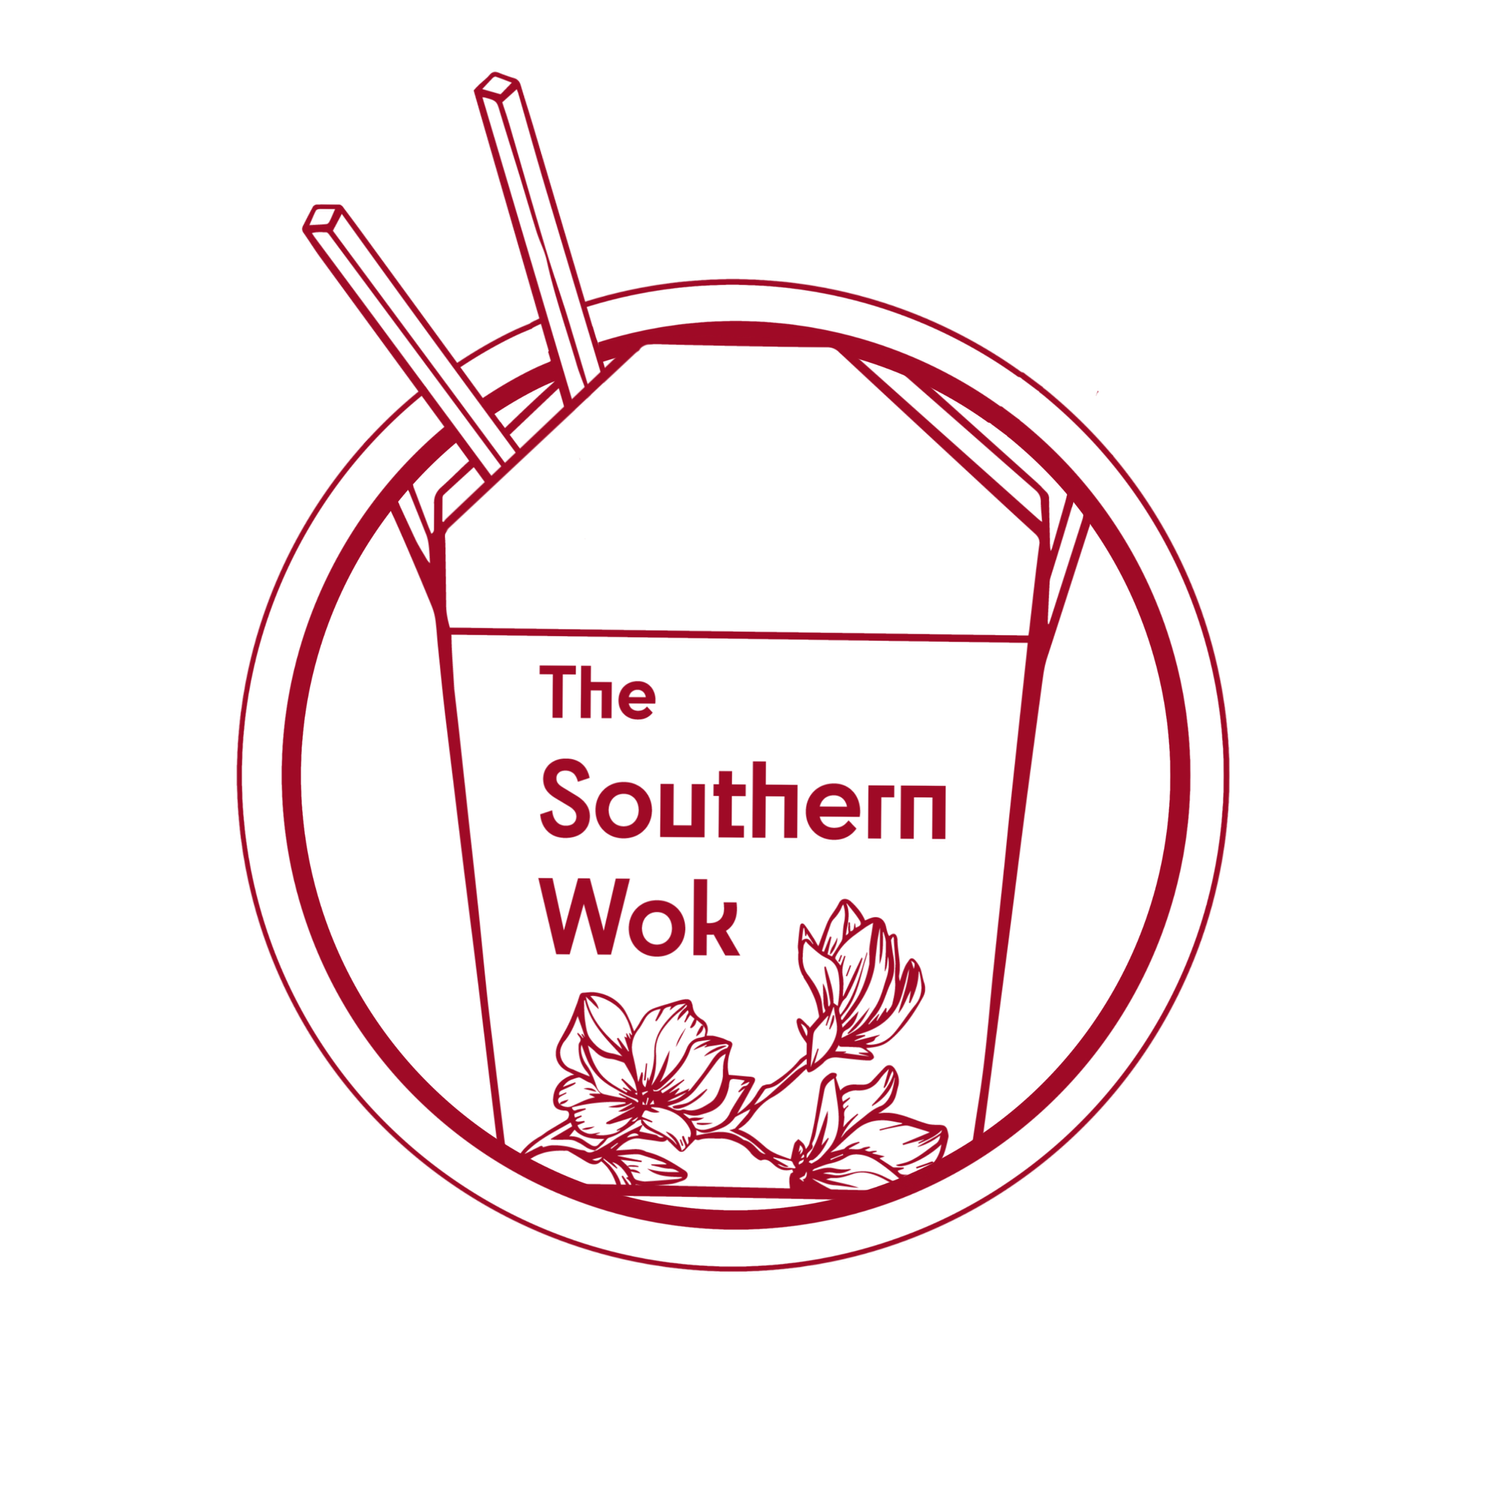 The Southern Wok